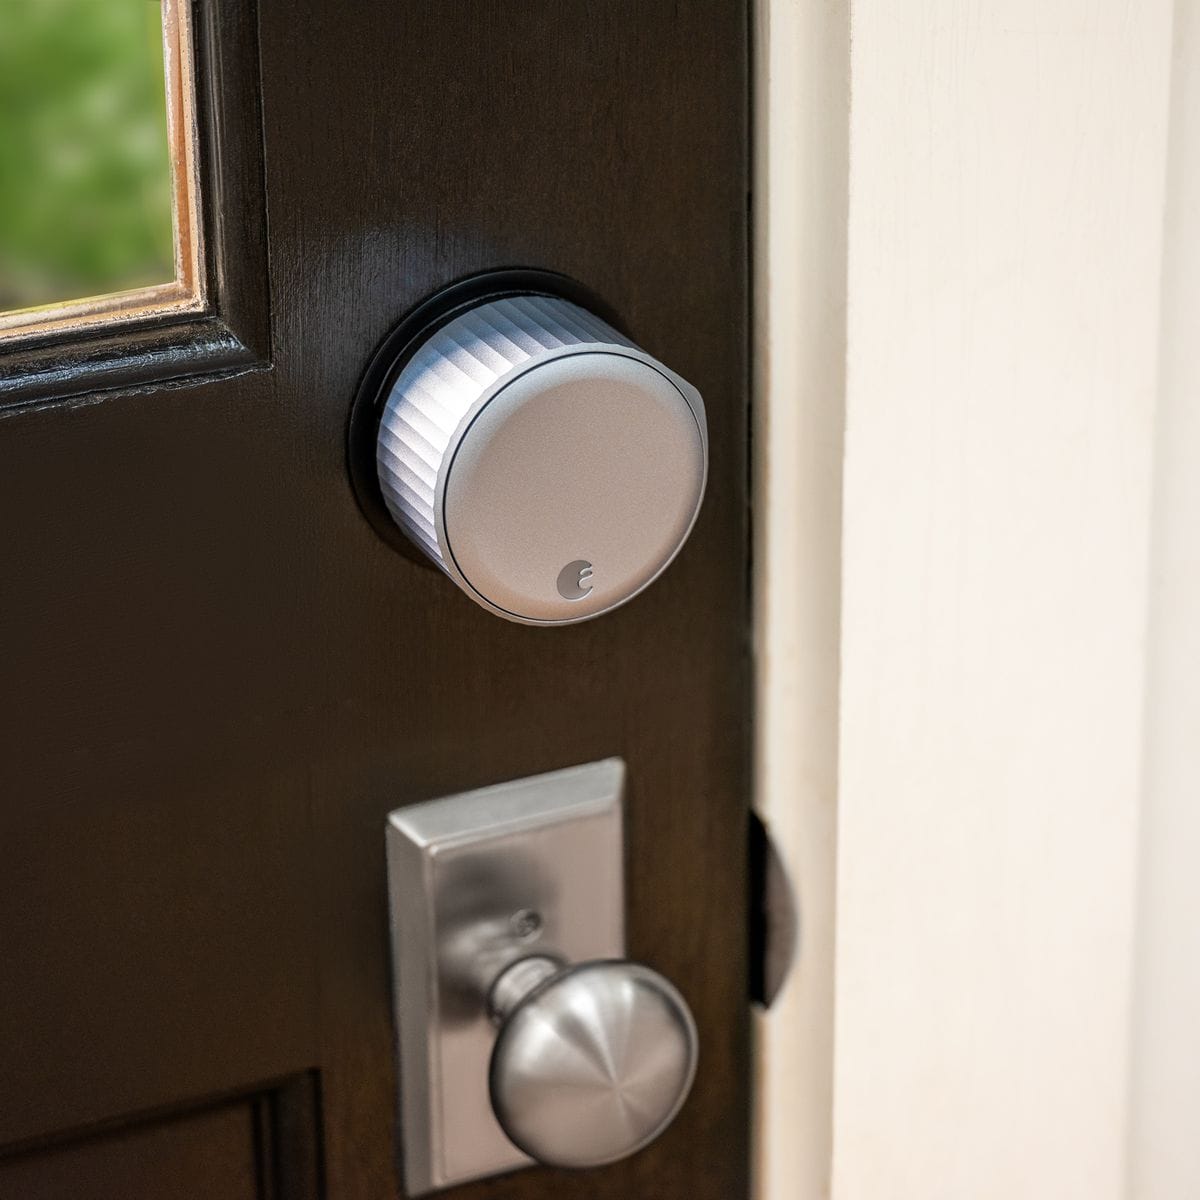 August Wi-Fi smart lock installed on brown door